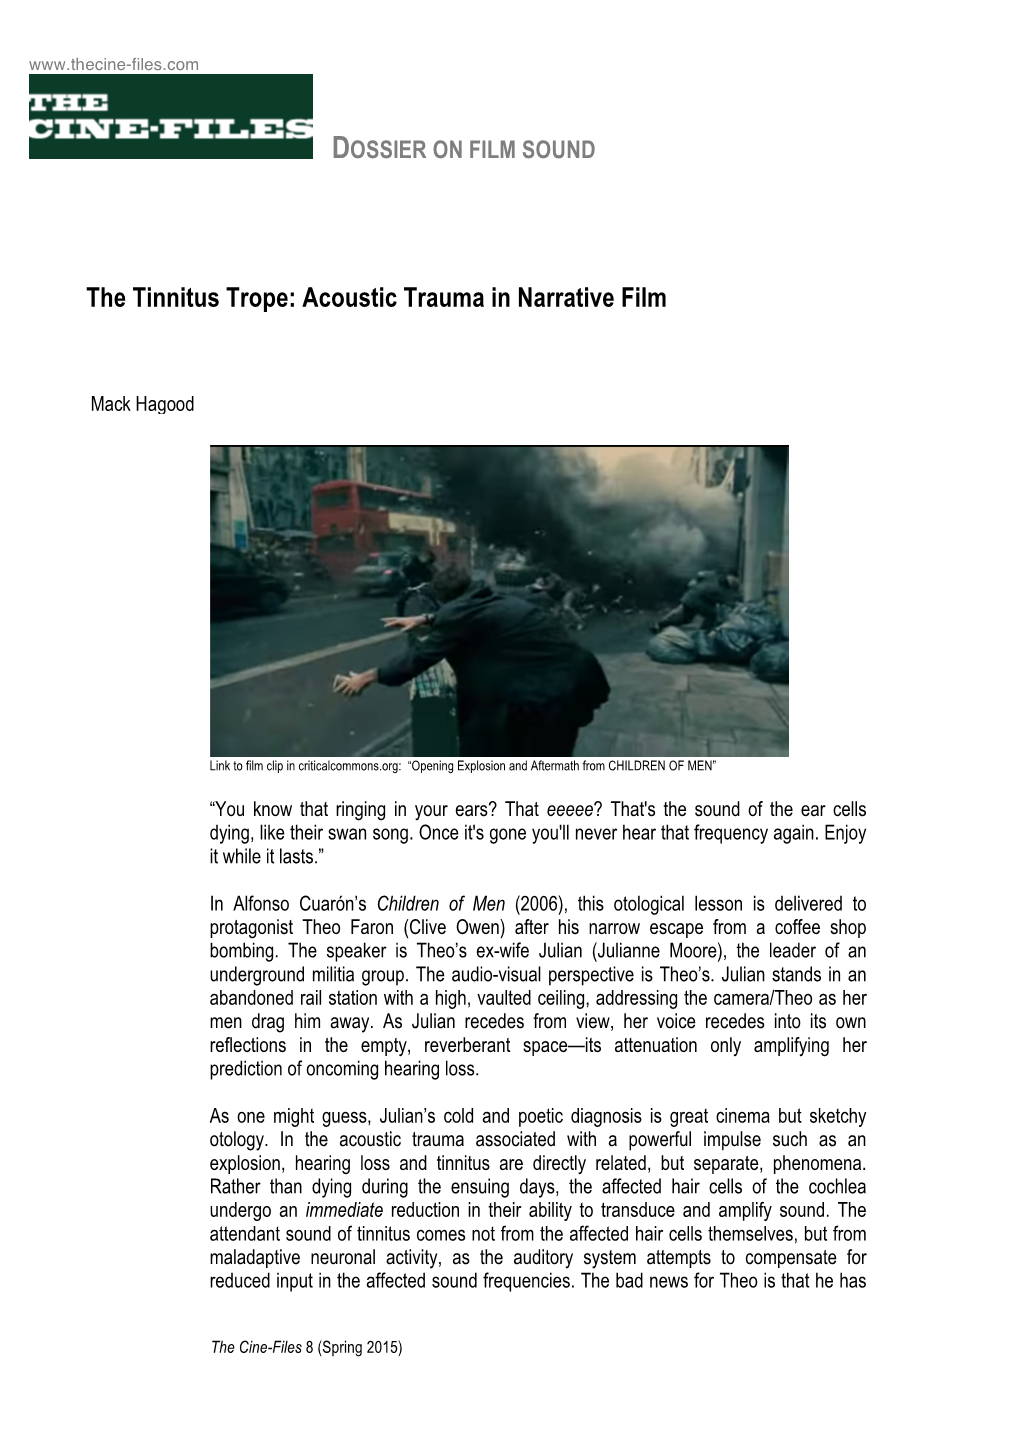 The Tinnitus Trope: Acoustic Trauma in Narrative Film